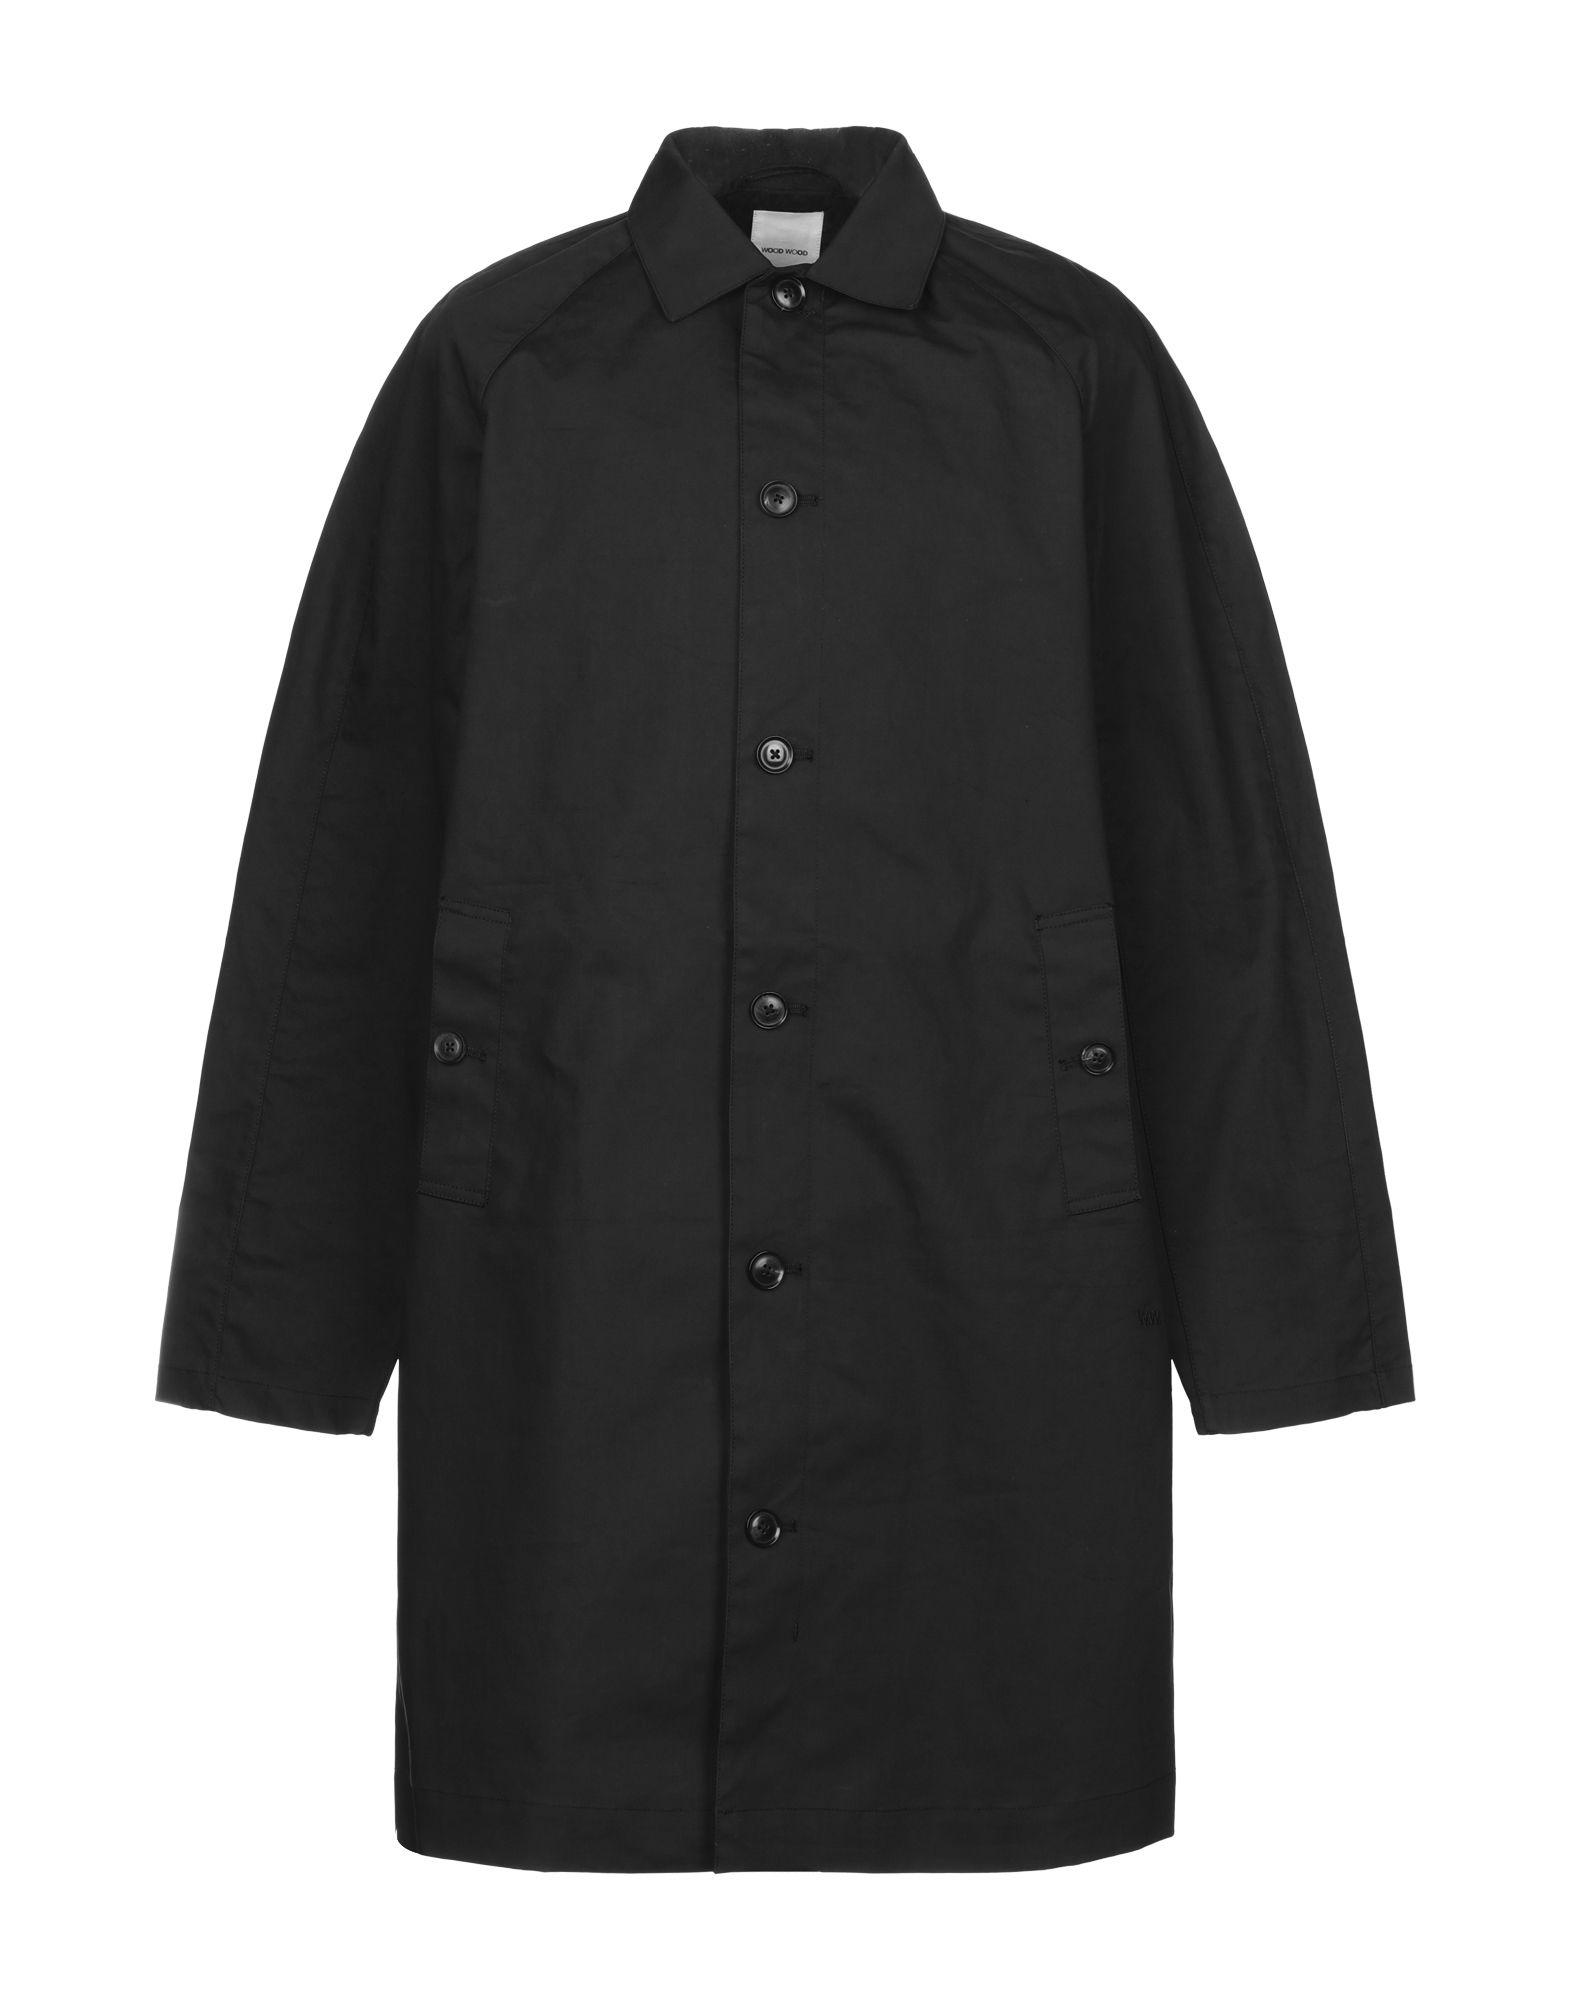 WOOD WOOD Overcoat in Black for Men - Lyst